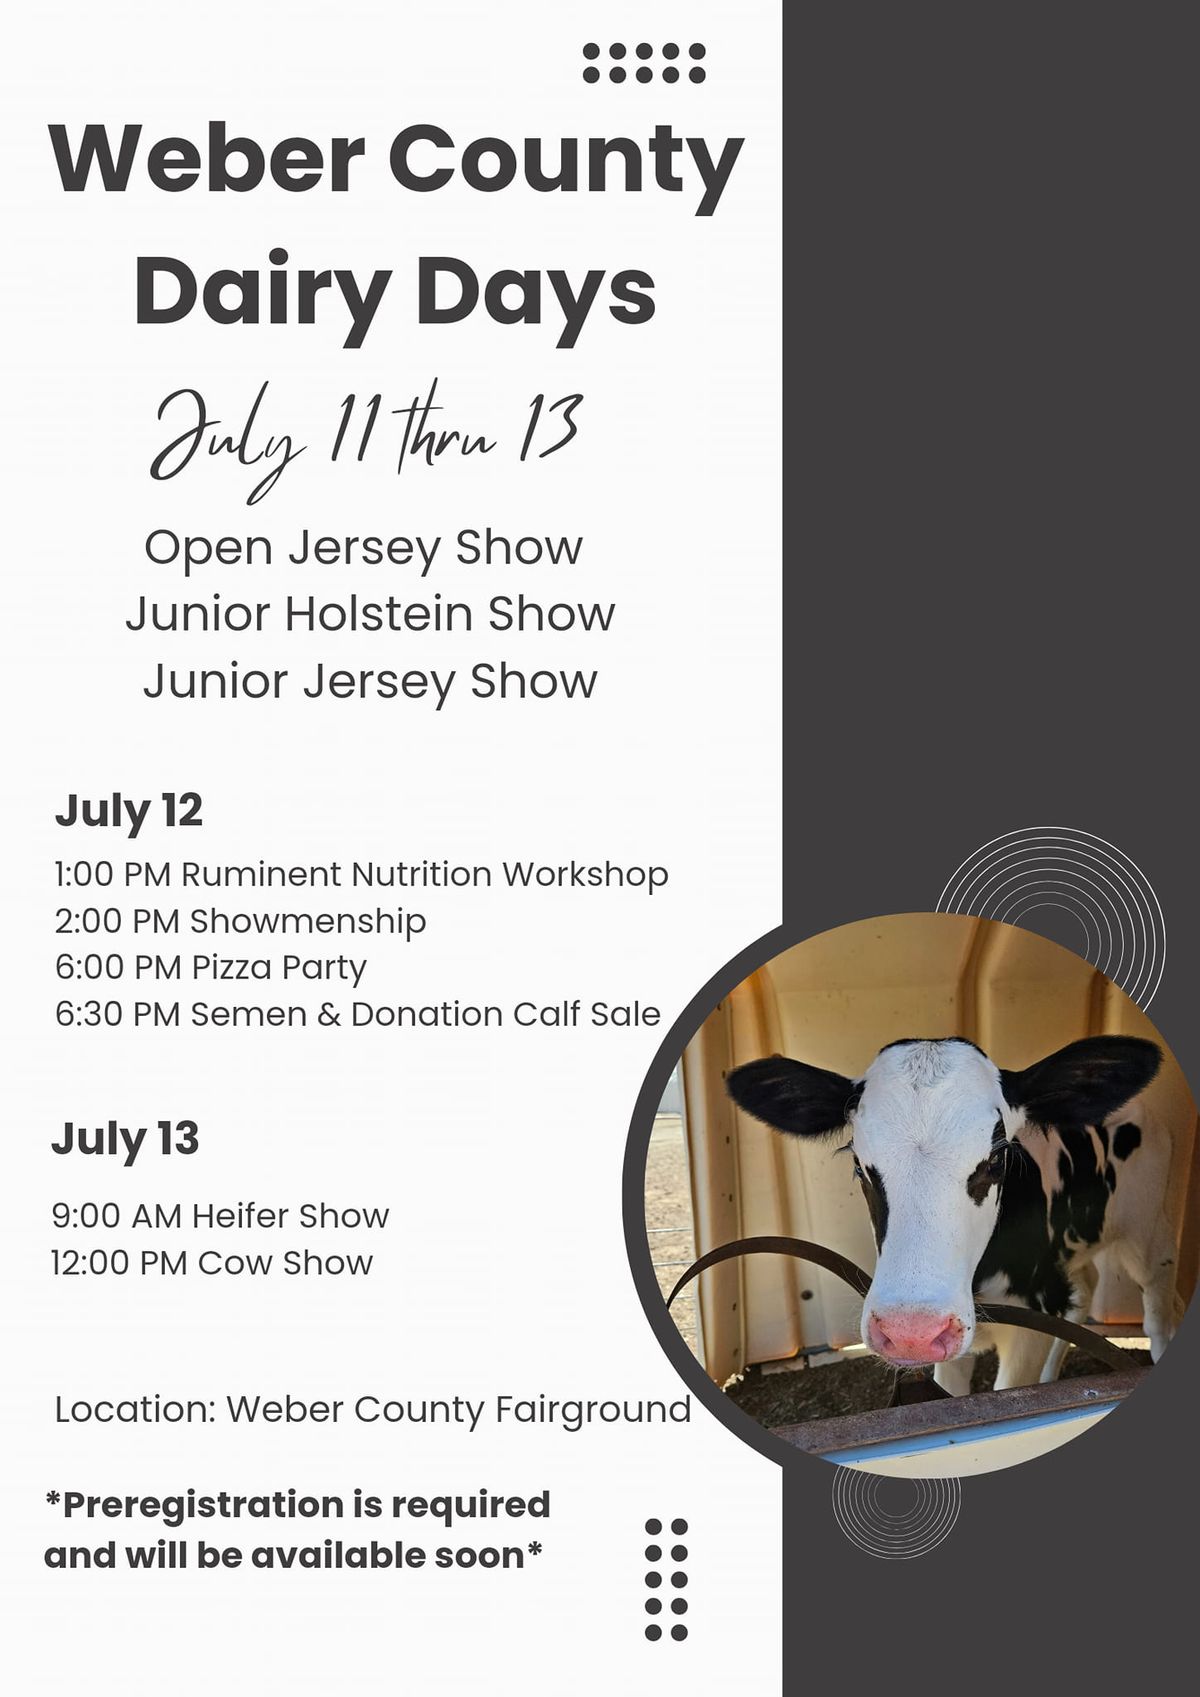 Weber County Dairy Days